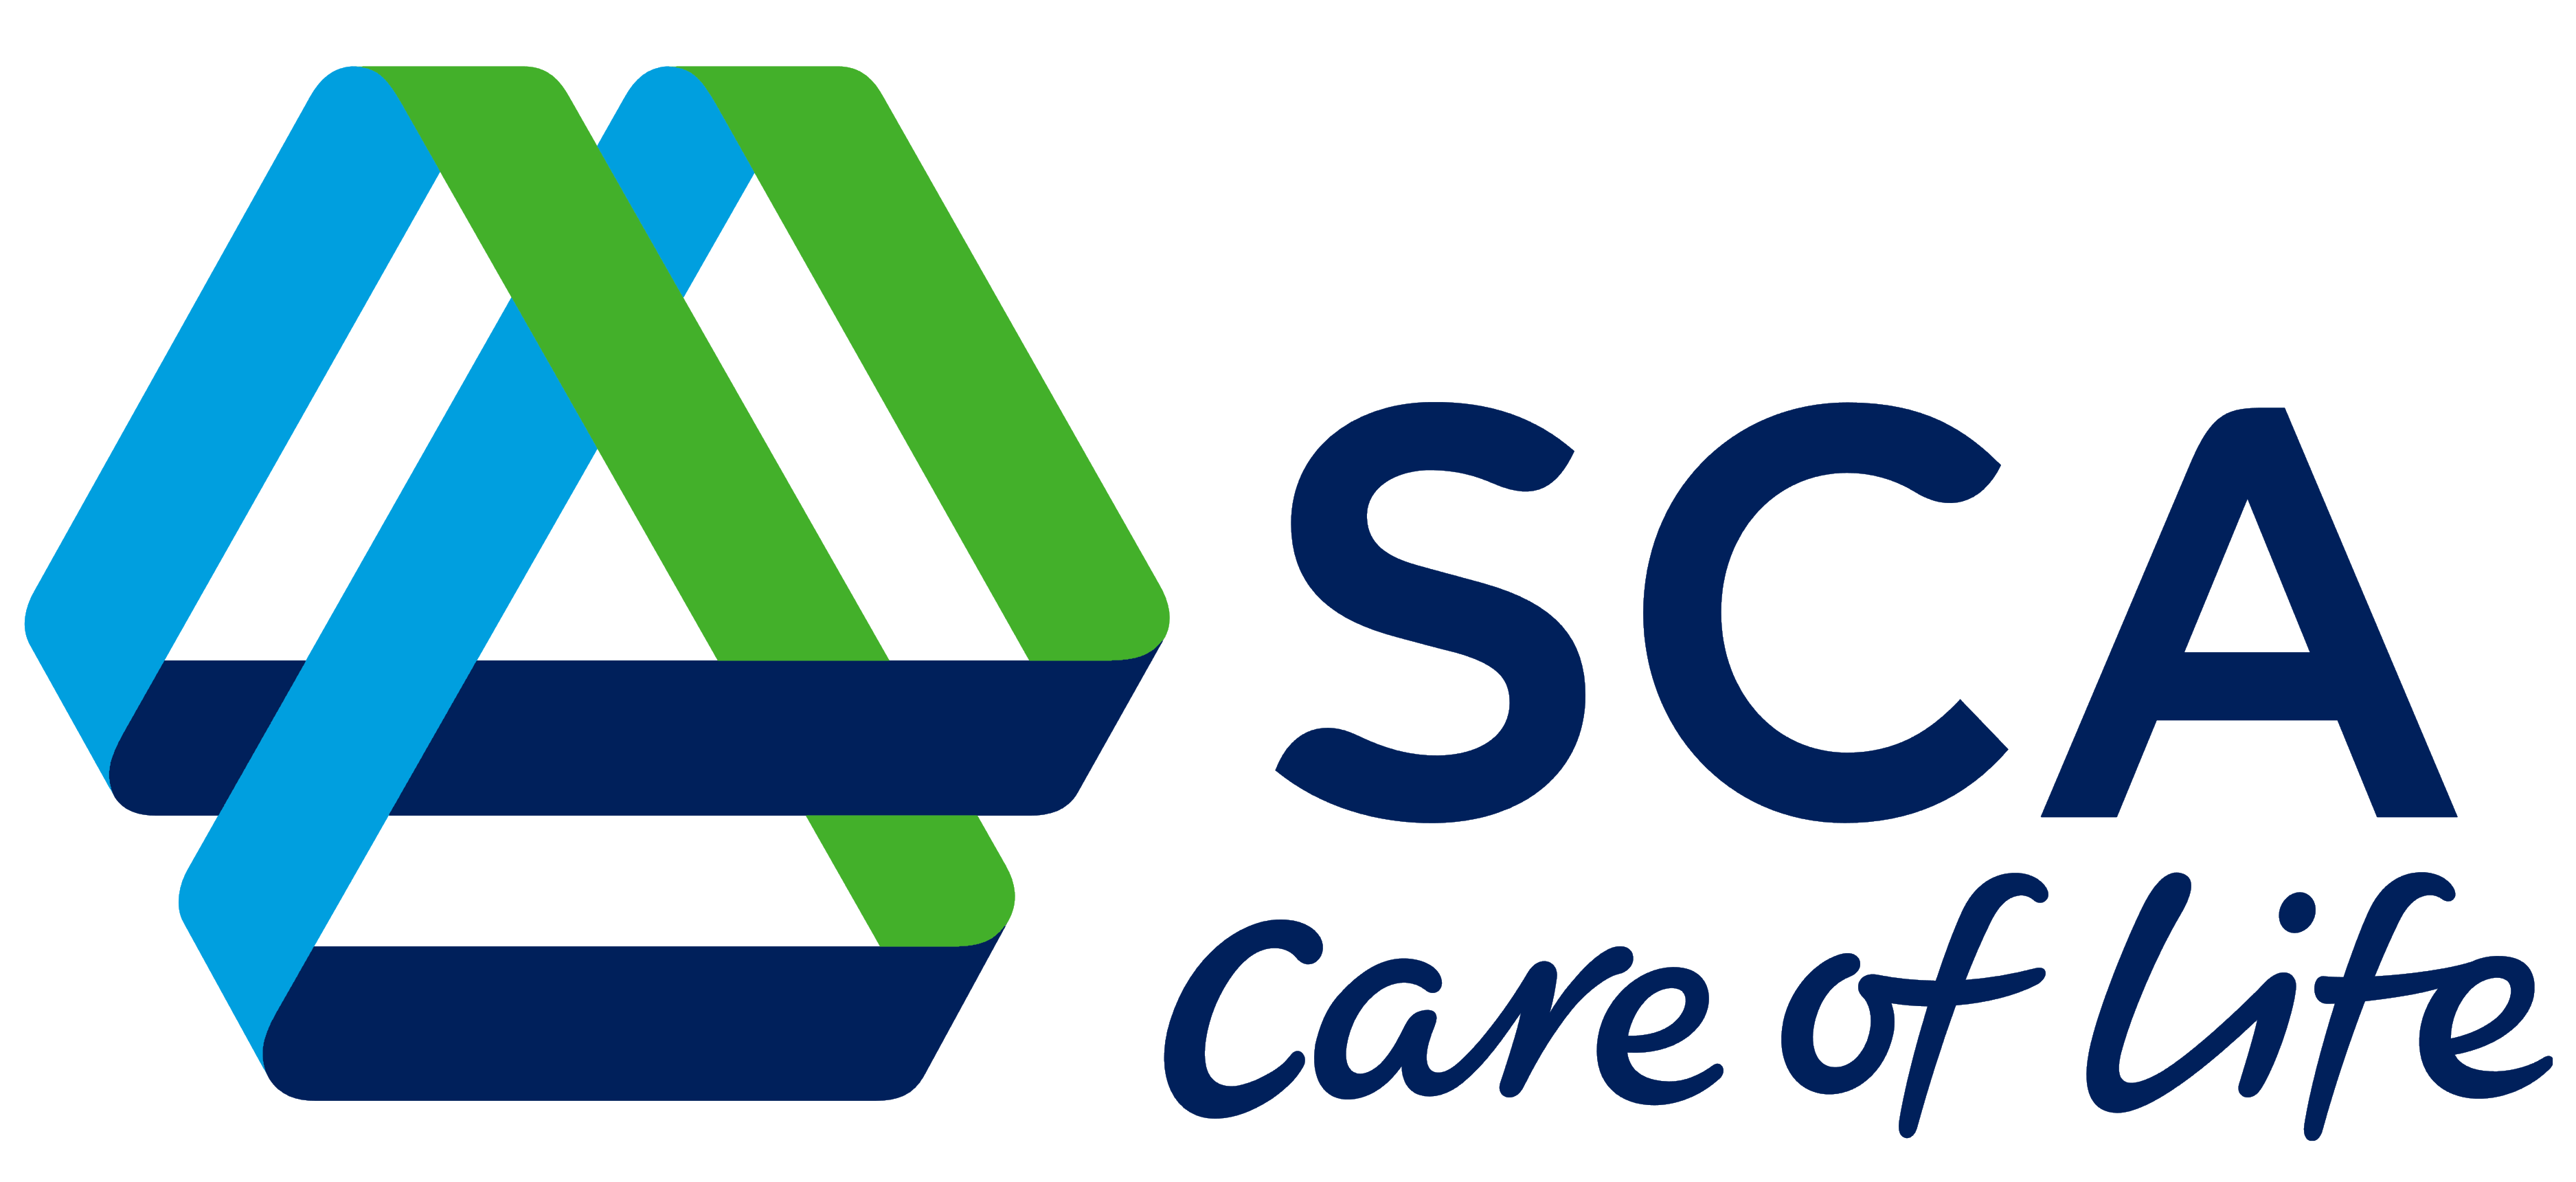 SCA logo, logotype